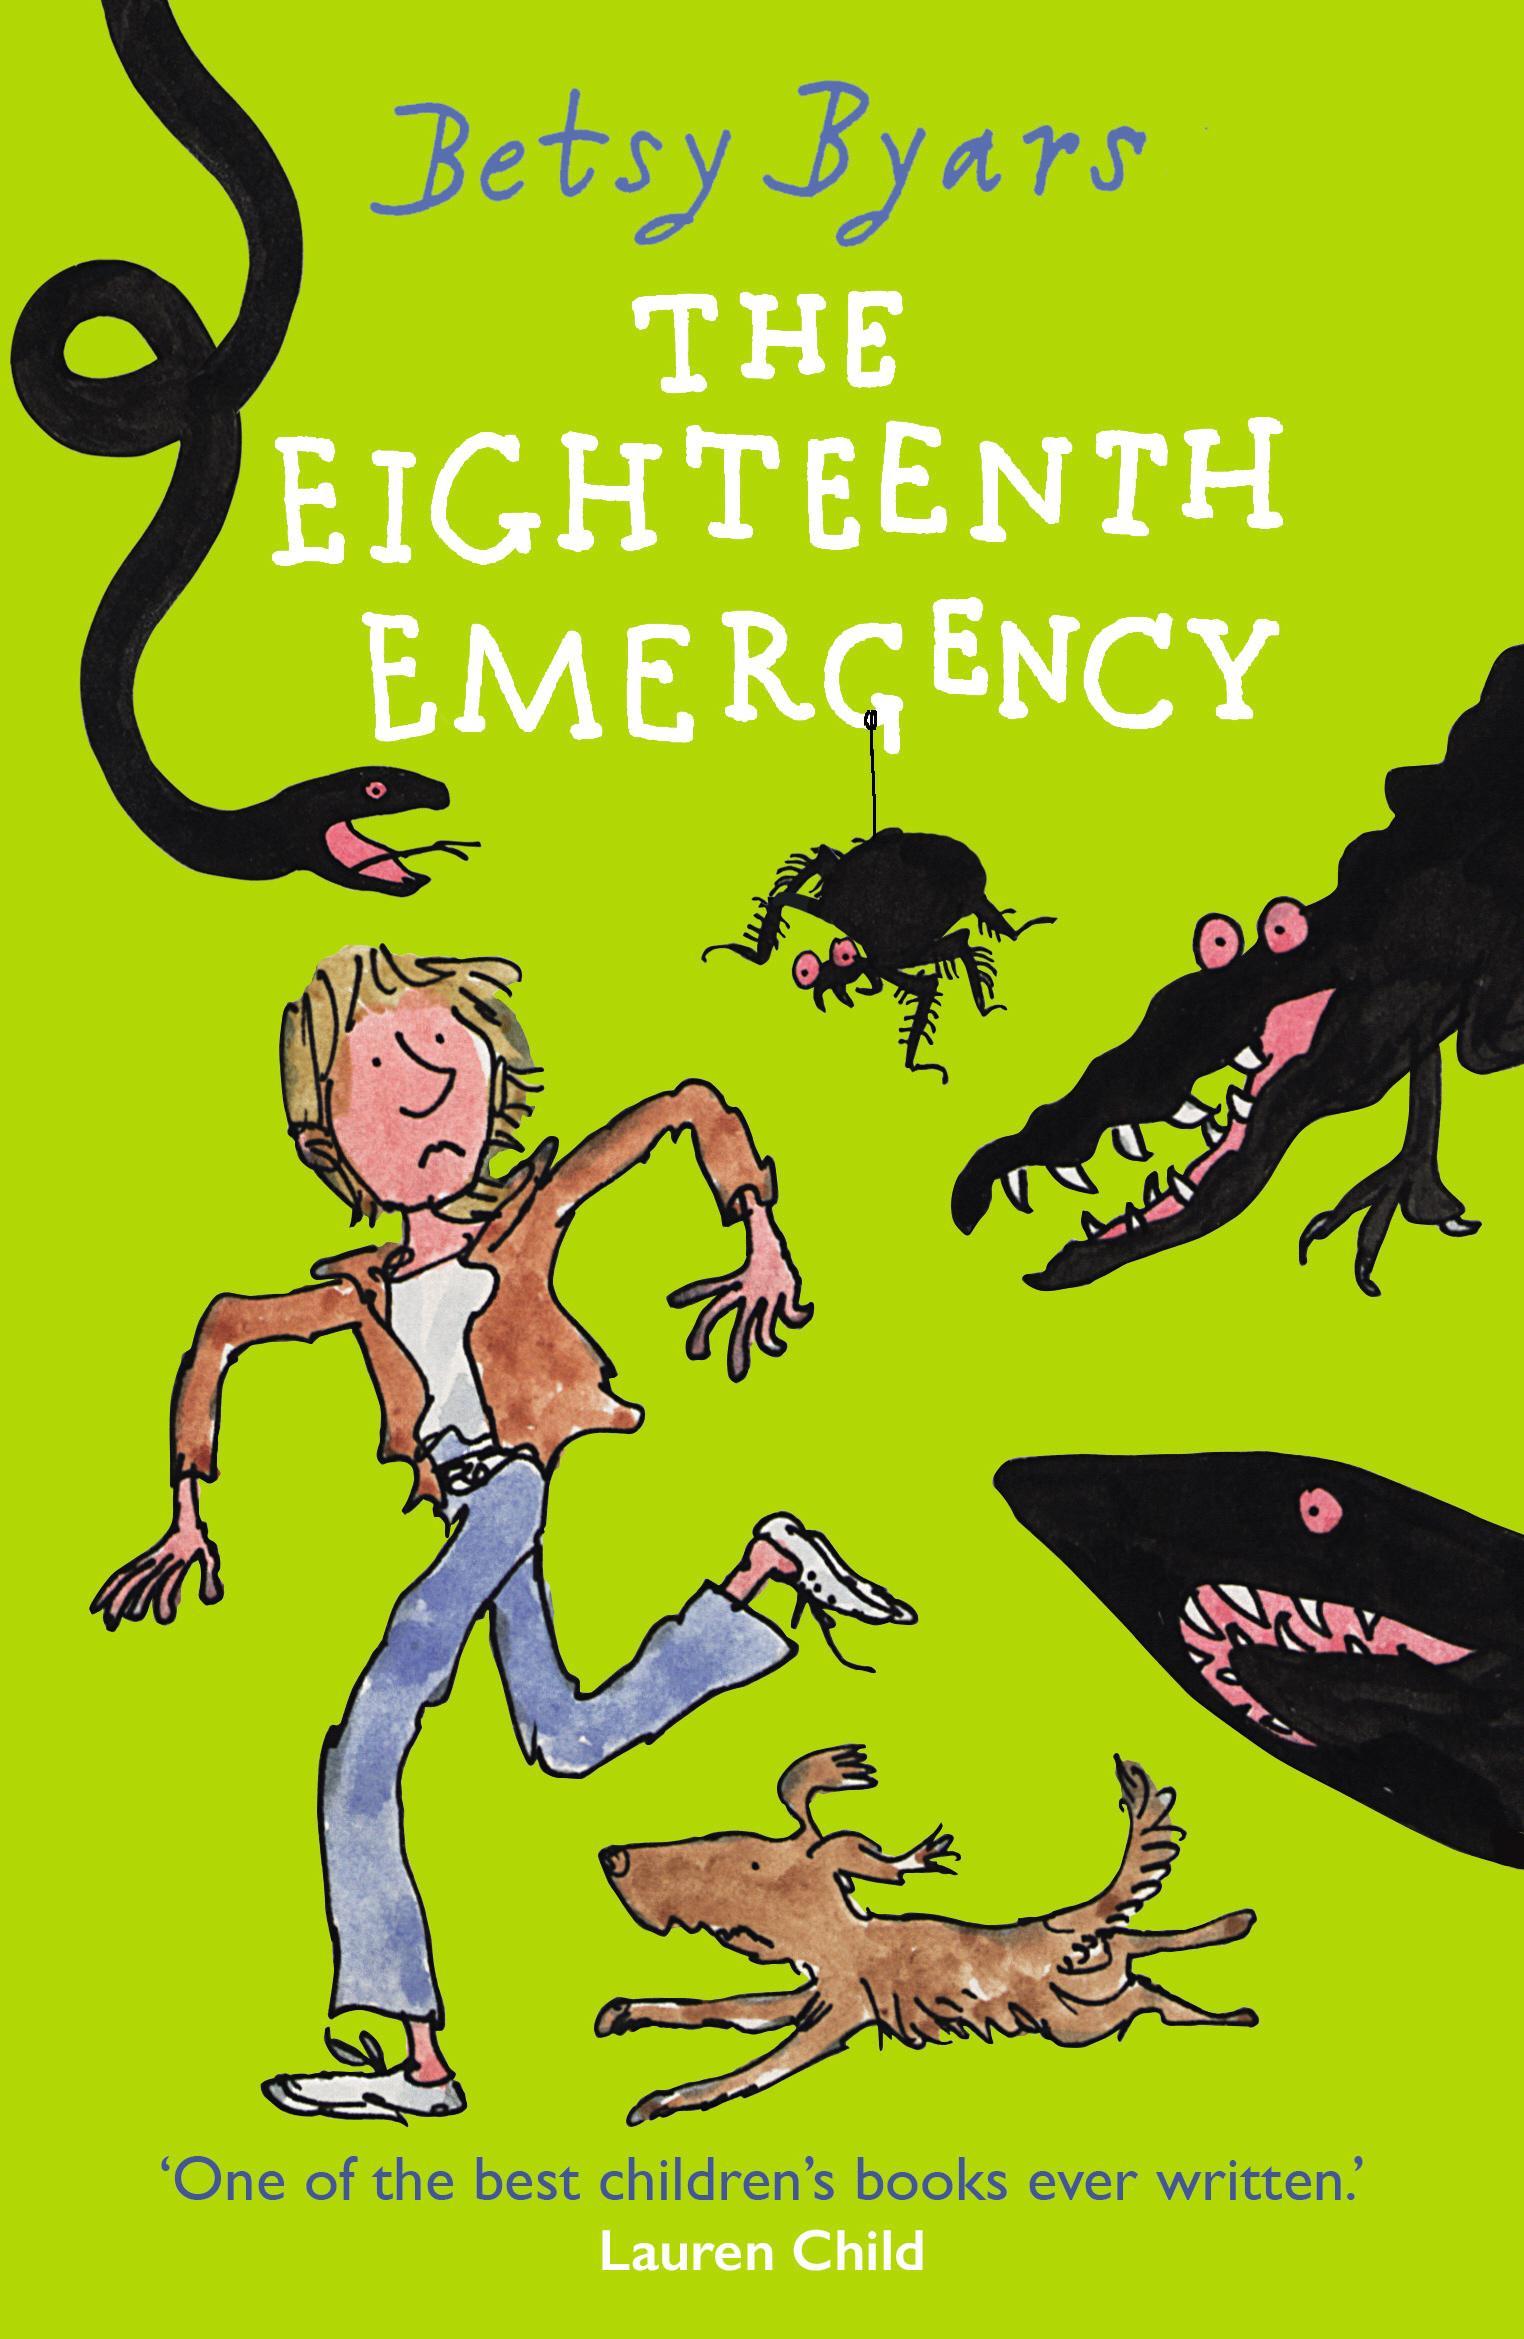 Eighteenth Emergency - Betsy Byars